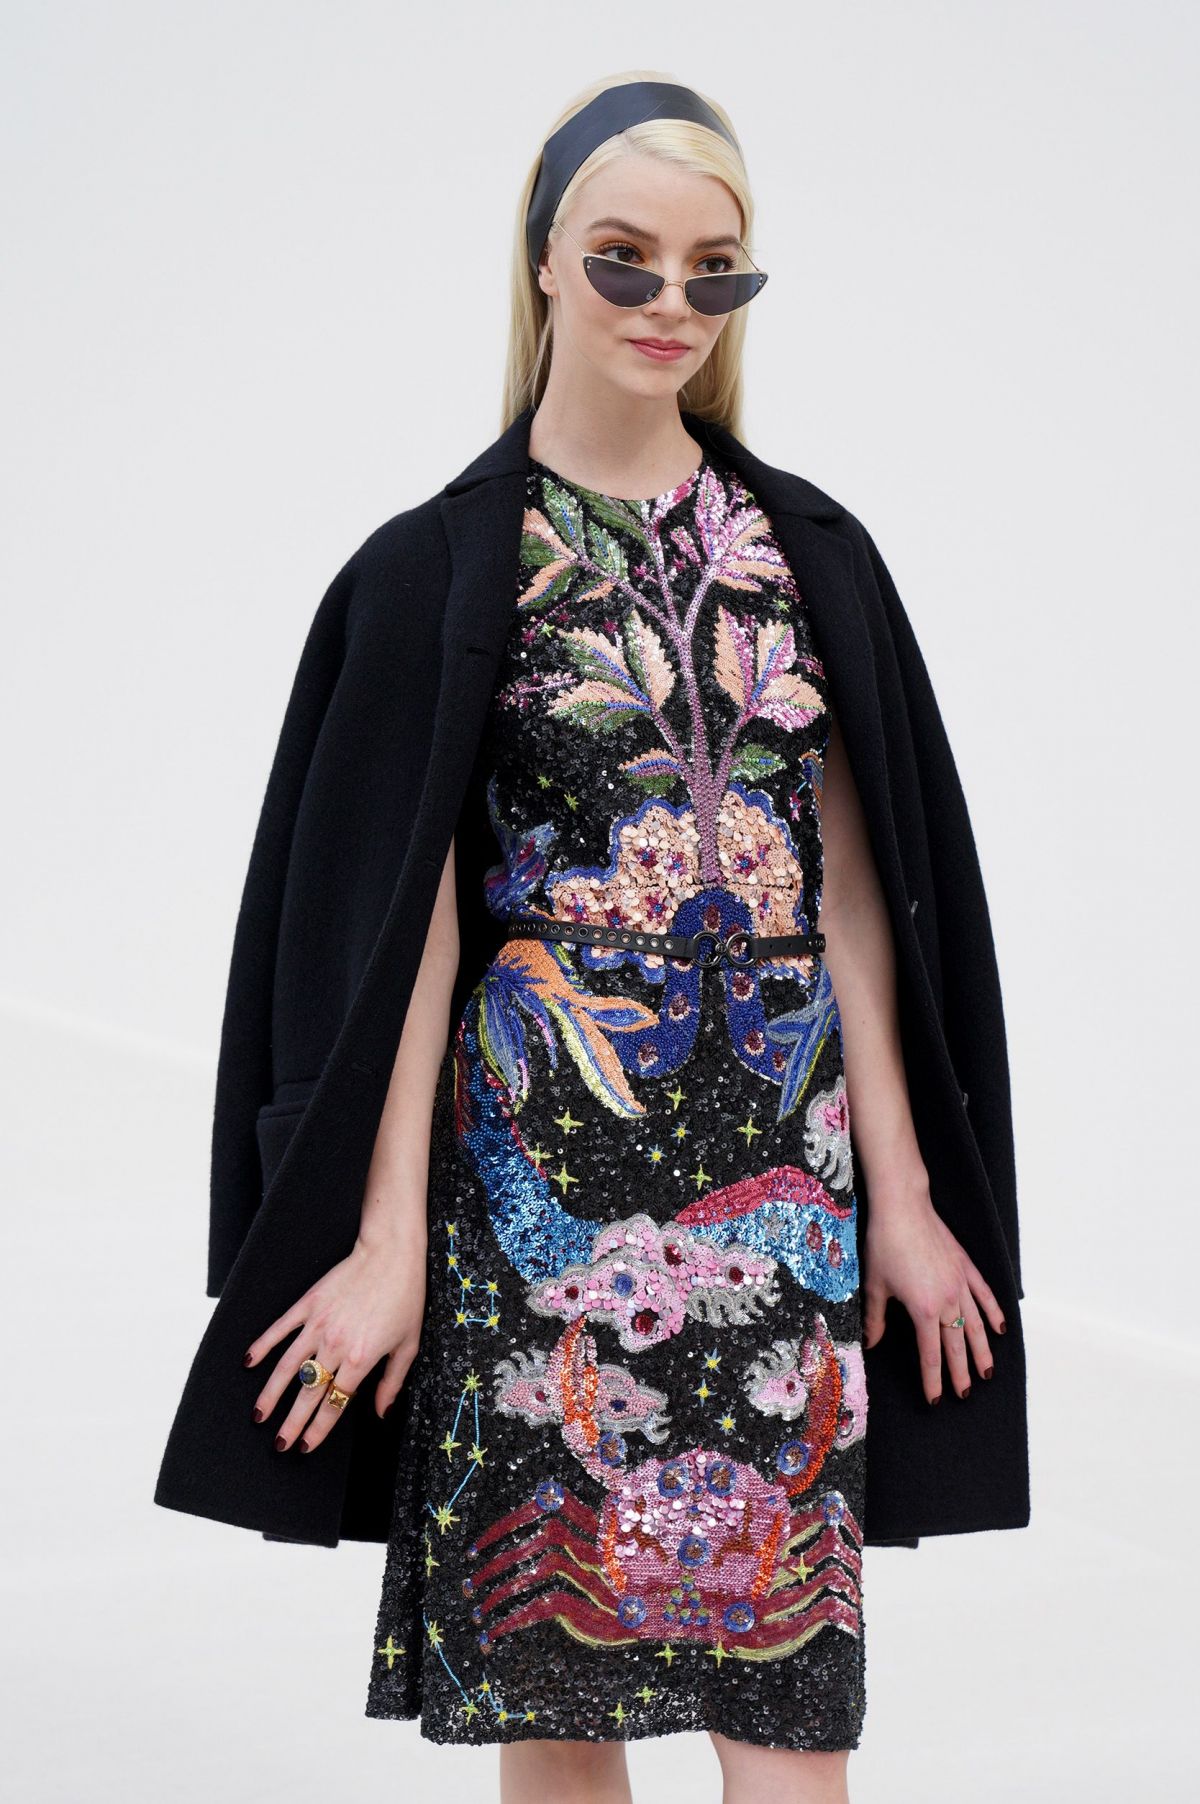 ANYA TAYLOR-JOY at Dior Fashion Show in Paris 03/01/2022 – HawtCelebs